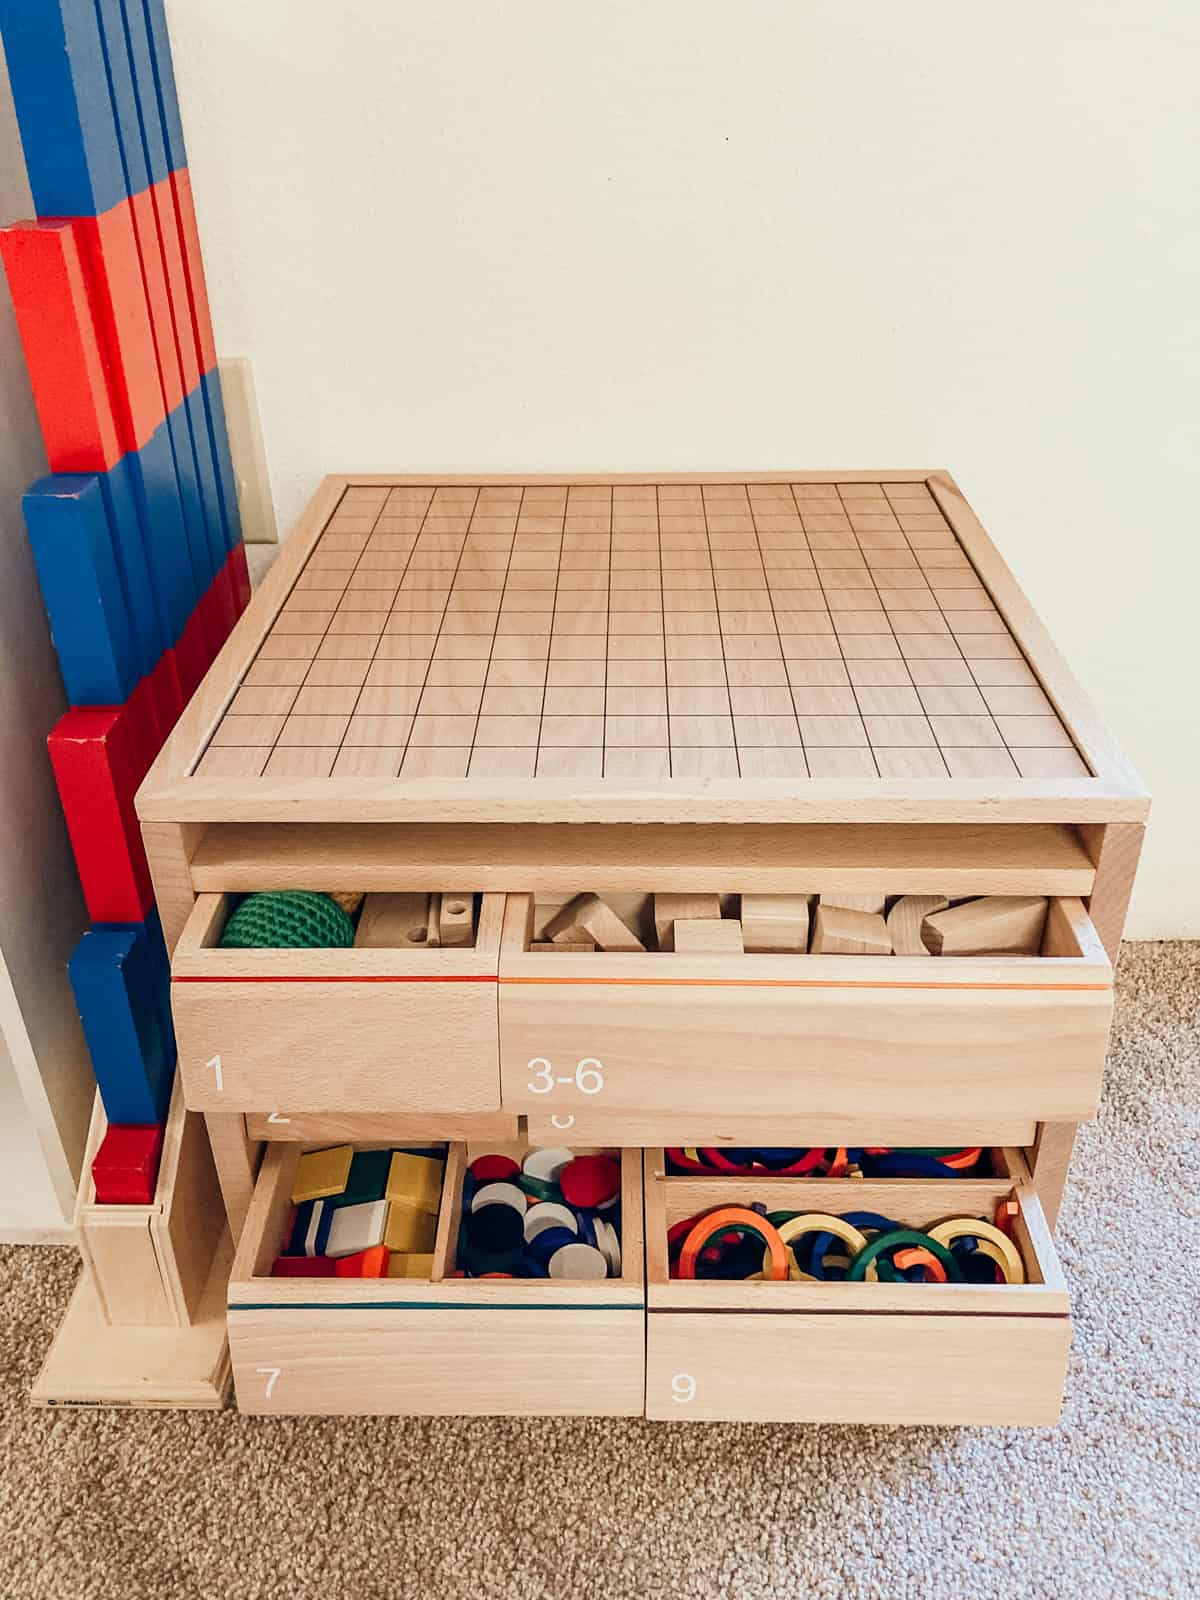 spielgaben with drawers open and manipulatives showing in a preschool and kindergarten homeschool room